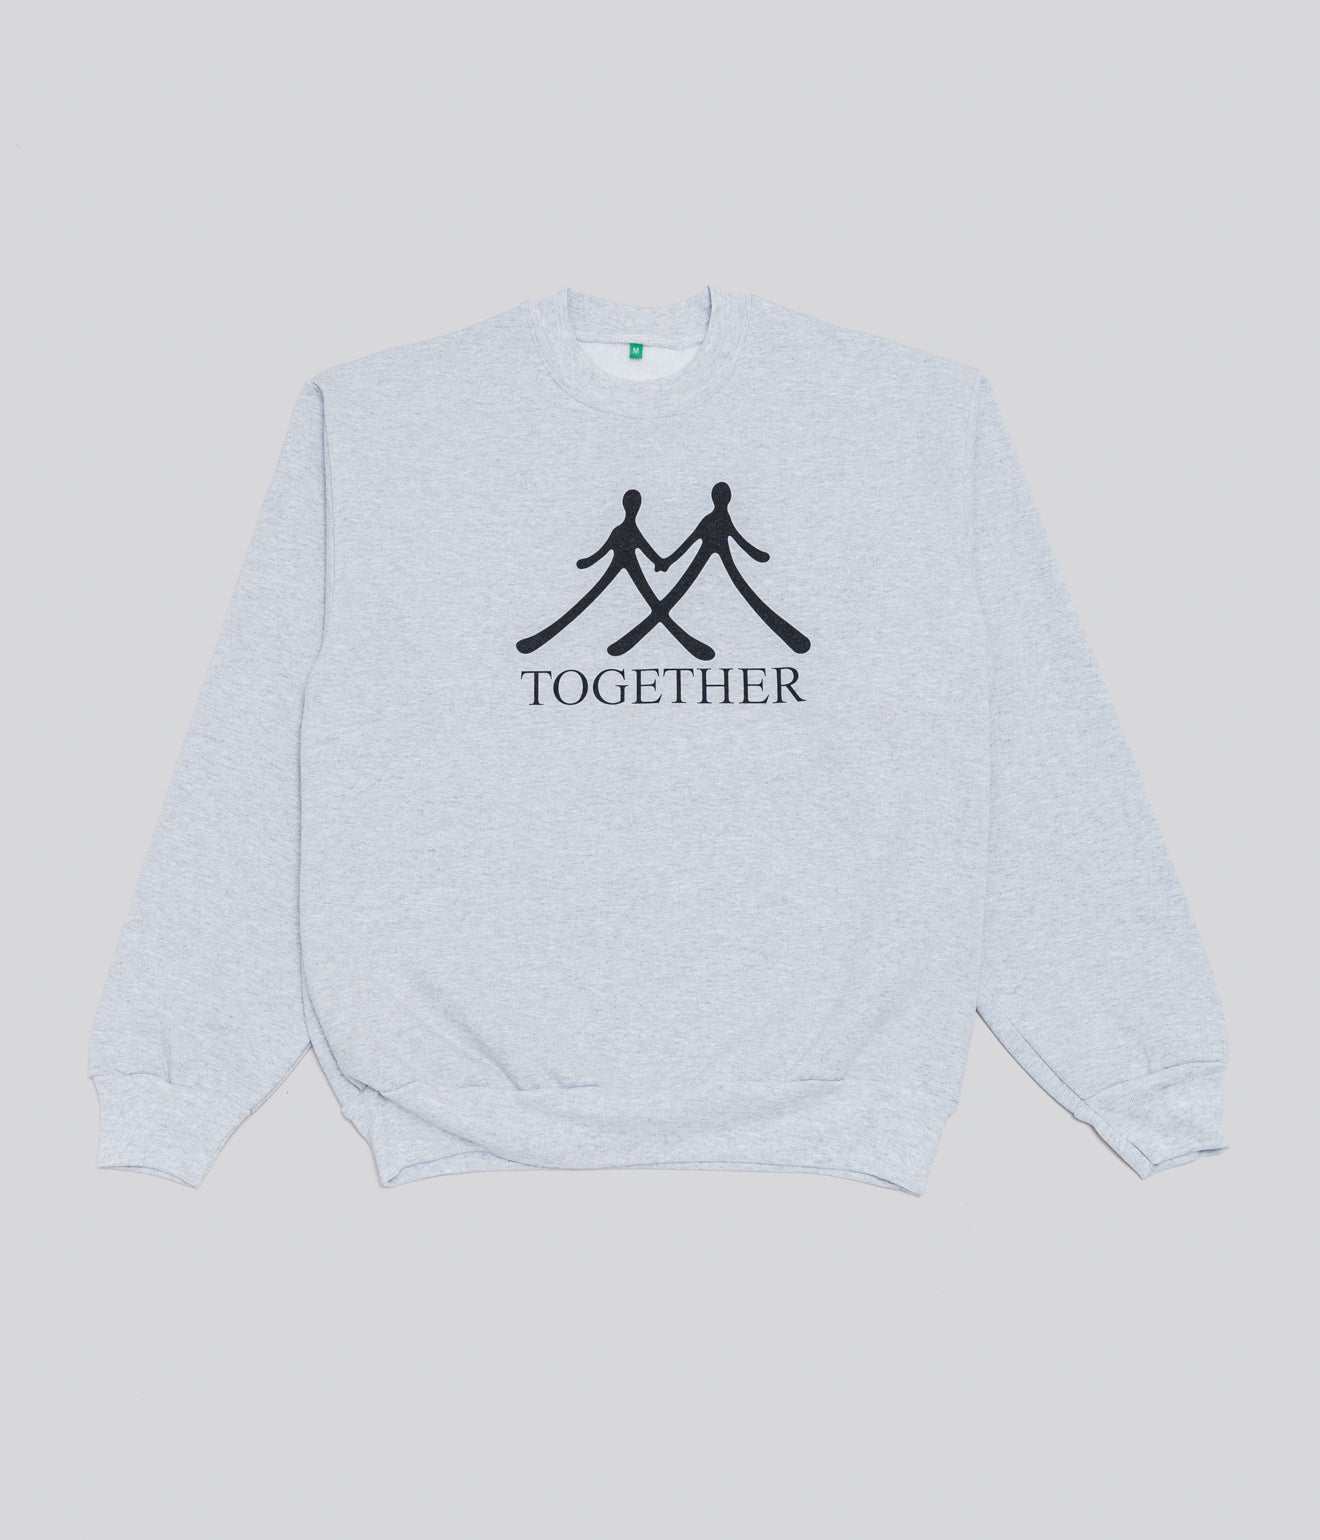 b.Eautiful "Together Crewneck Sweatshirt" - WEAREALLANIMALS